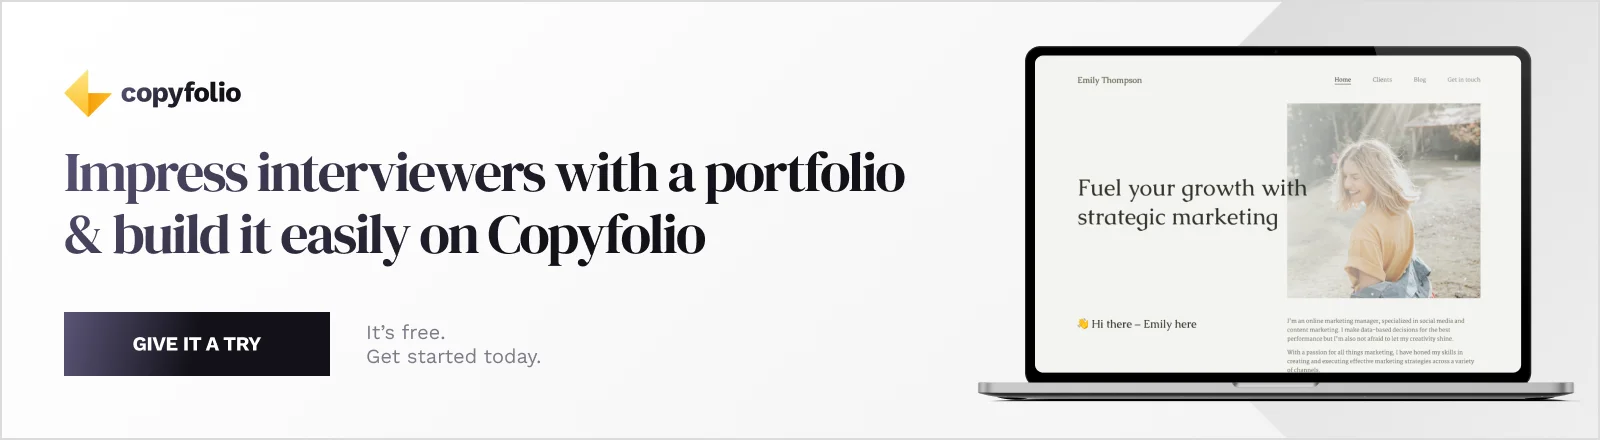 Impress interviewers with a portfolio & build it easily on Copyfolio.